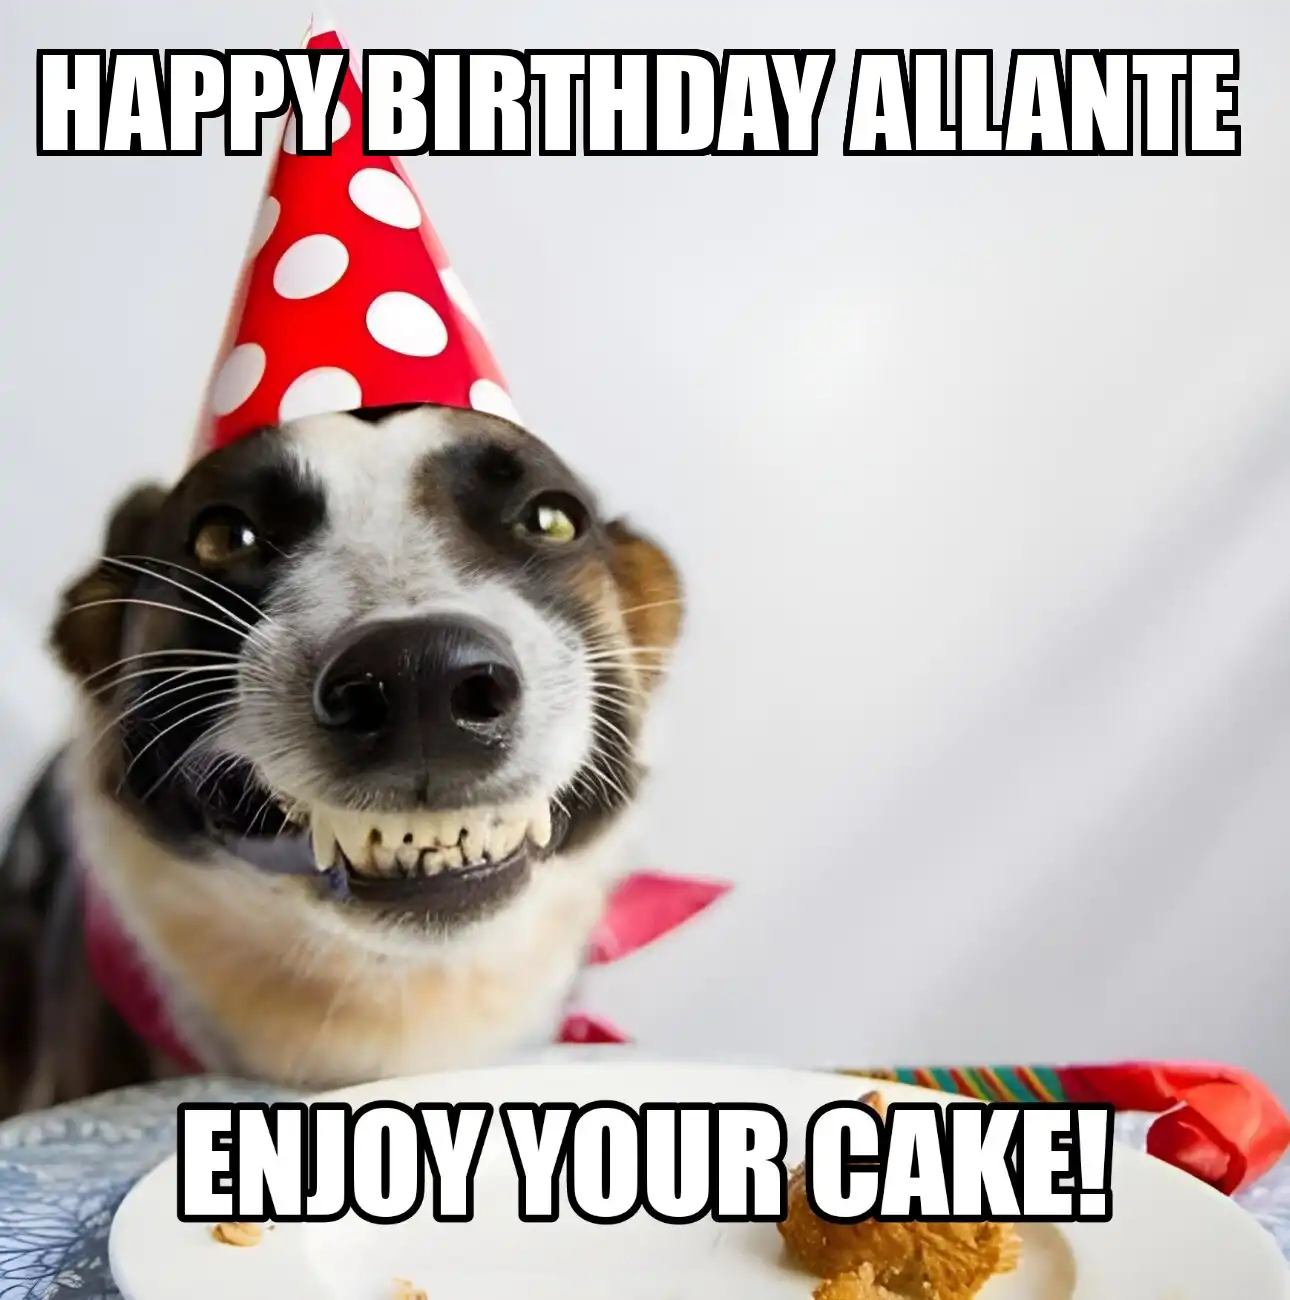 Happy Birthday Allante Enjoy Your Cake Dog Meme